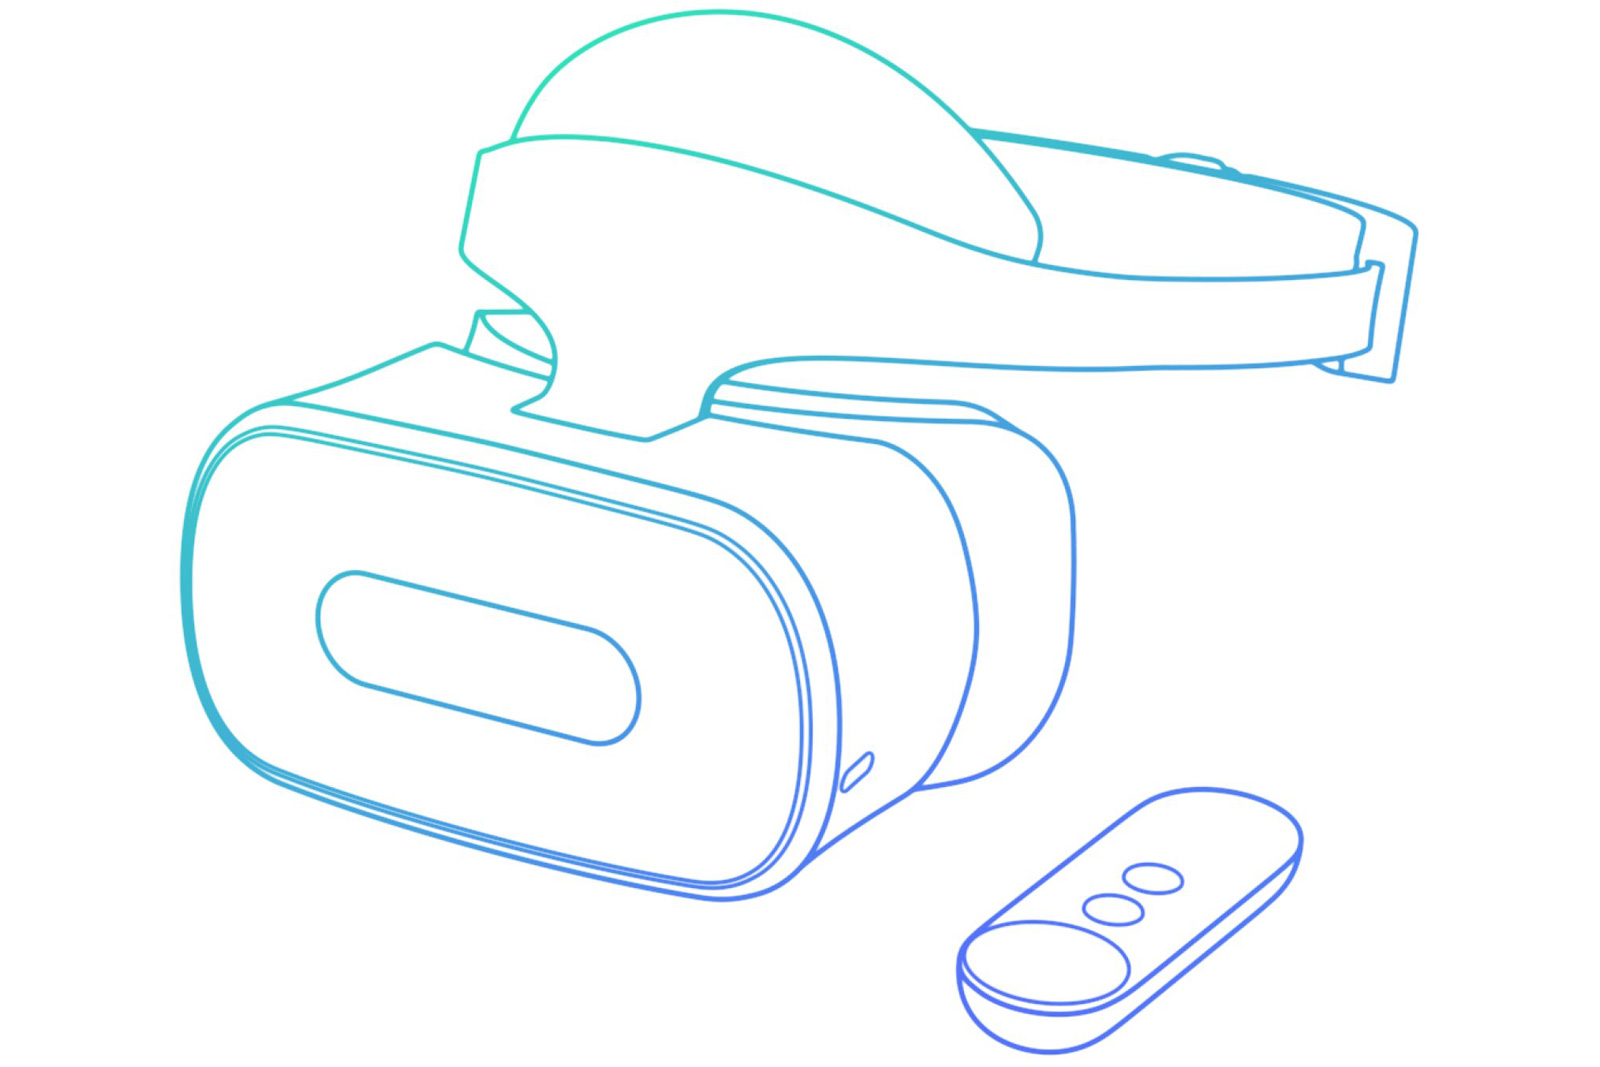 Lenovo's standalone Daydream VR headset